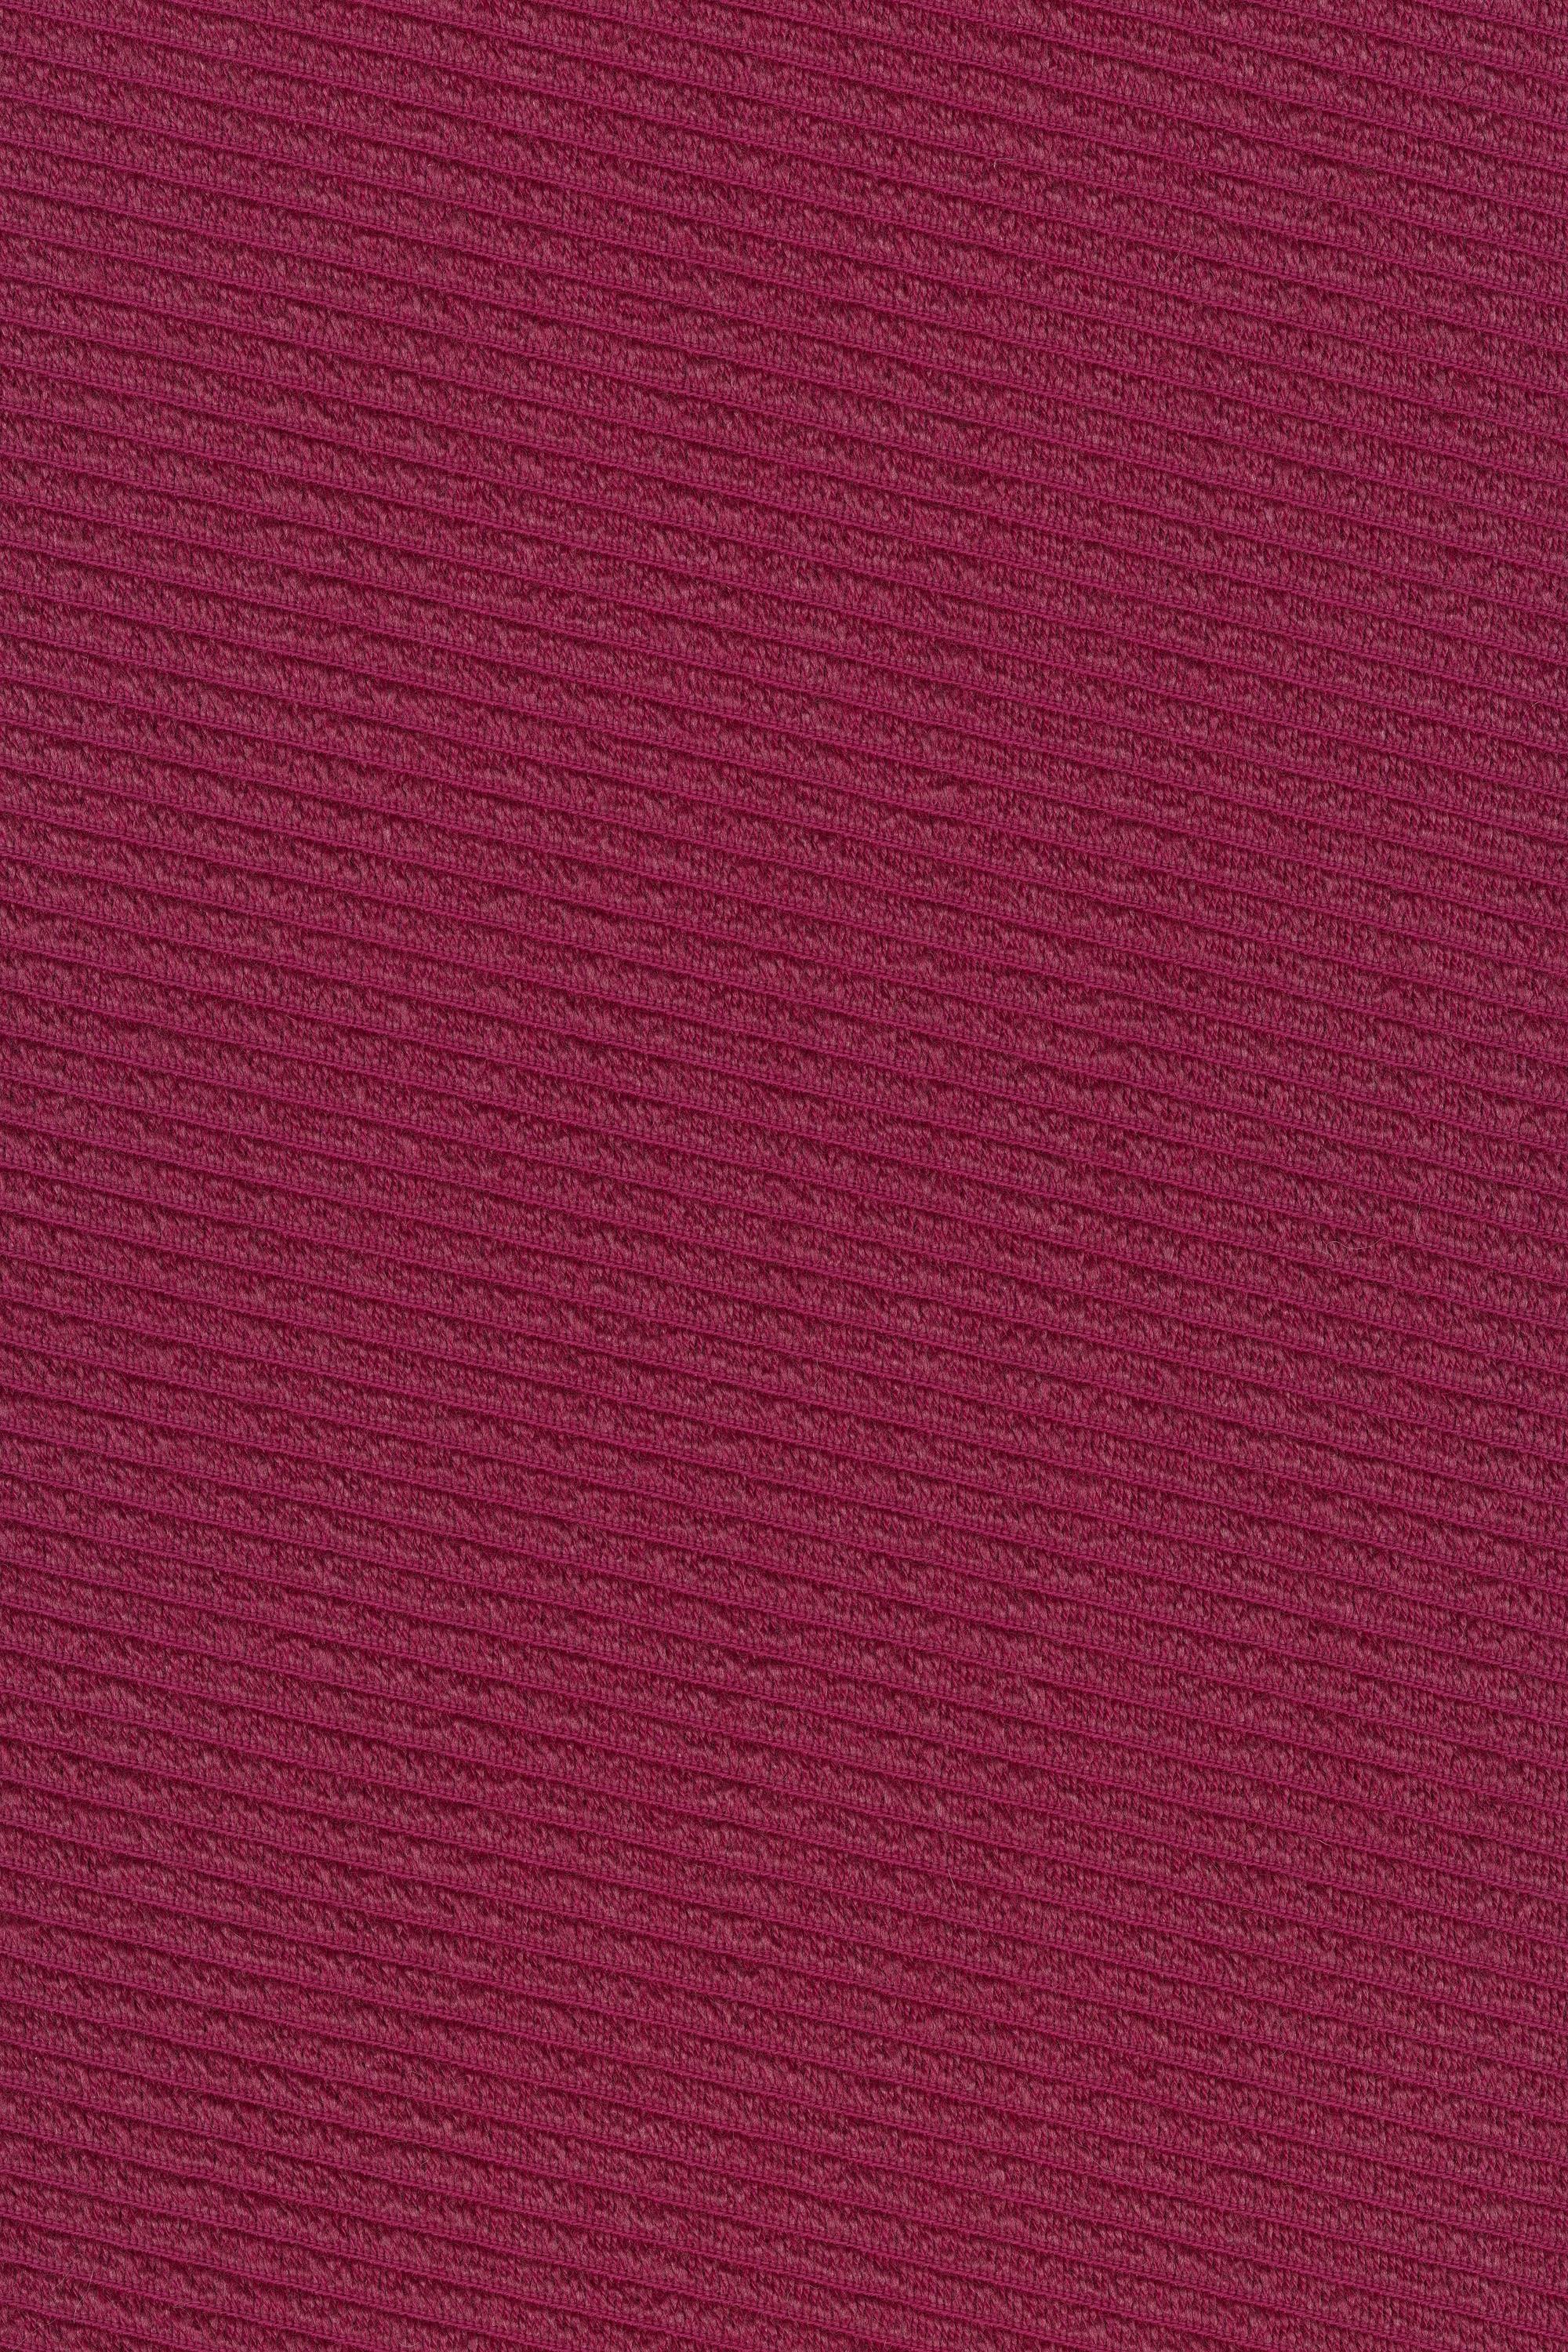 Kvadrat Aaren Upholstery Fabric 0653 by Raf Simons